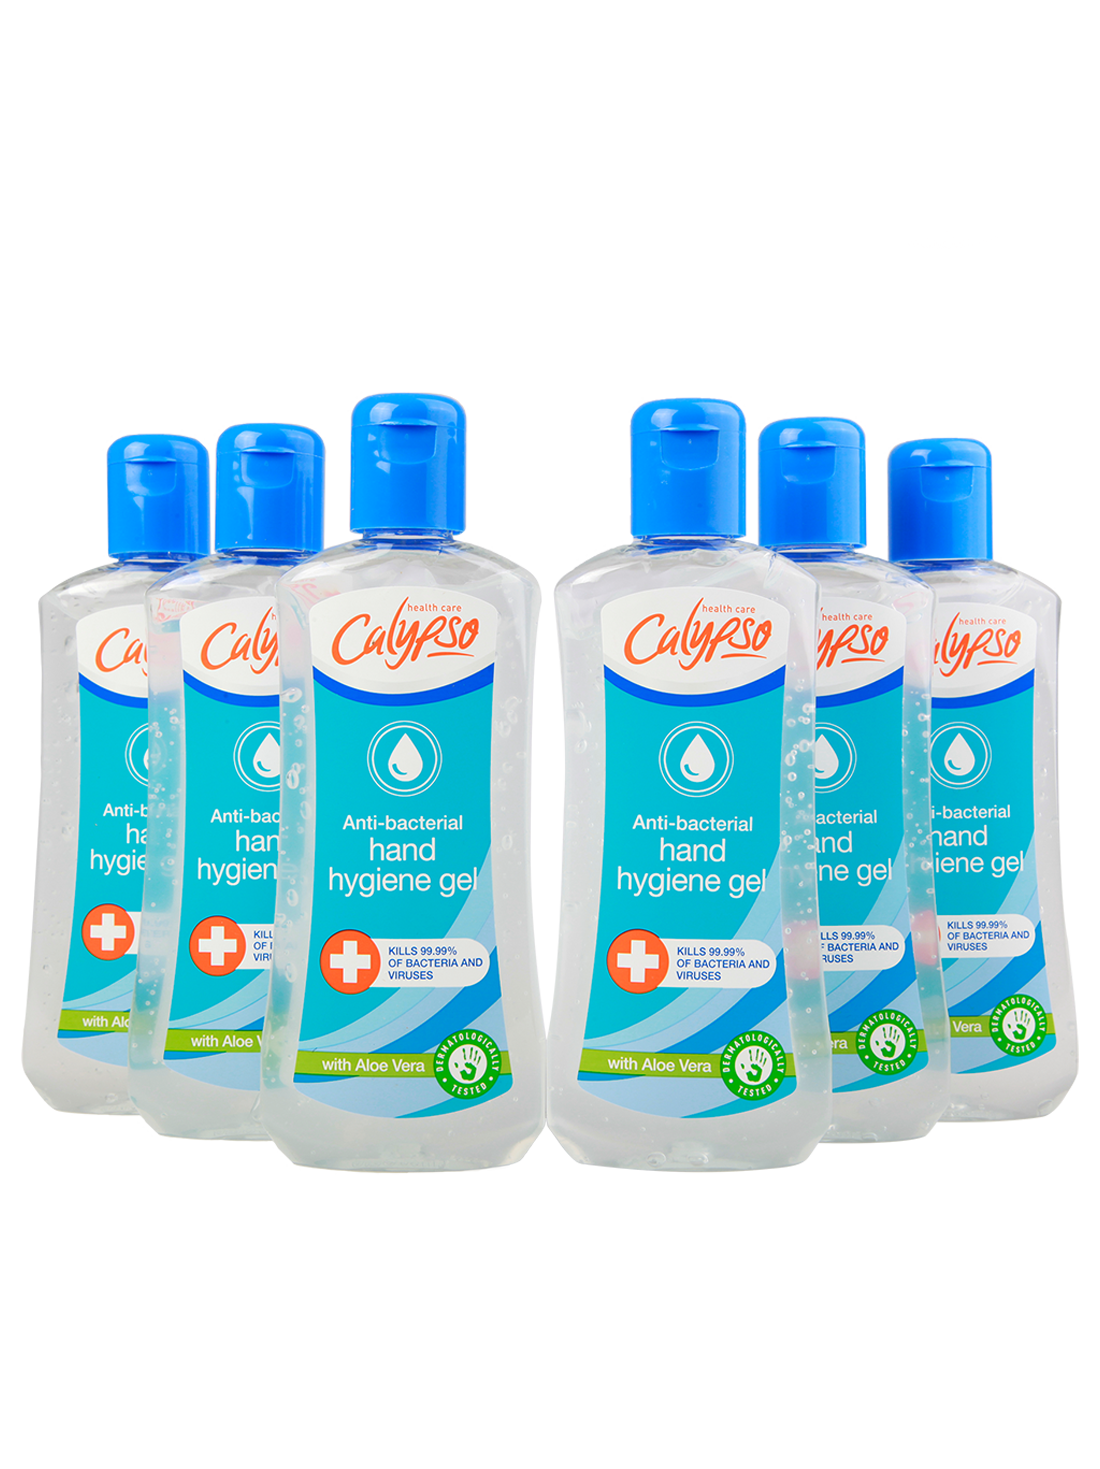 Calypso Hand Hygiene Gel 200ml box of 6 bottles